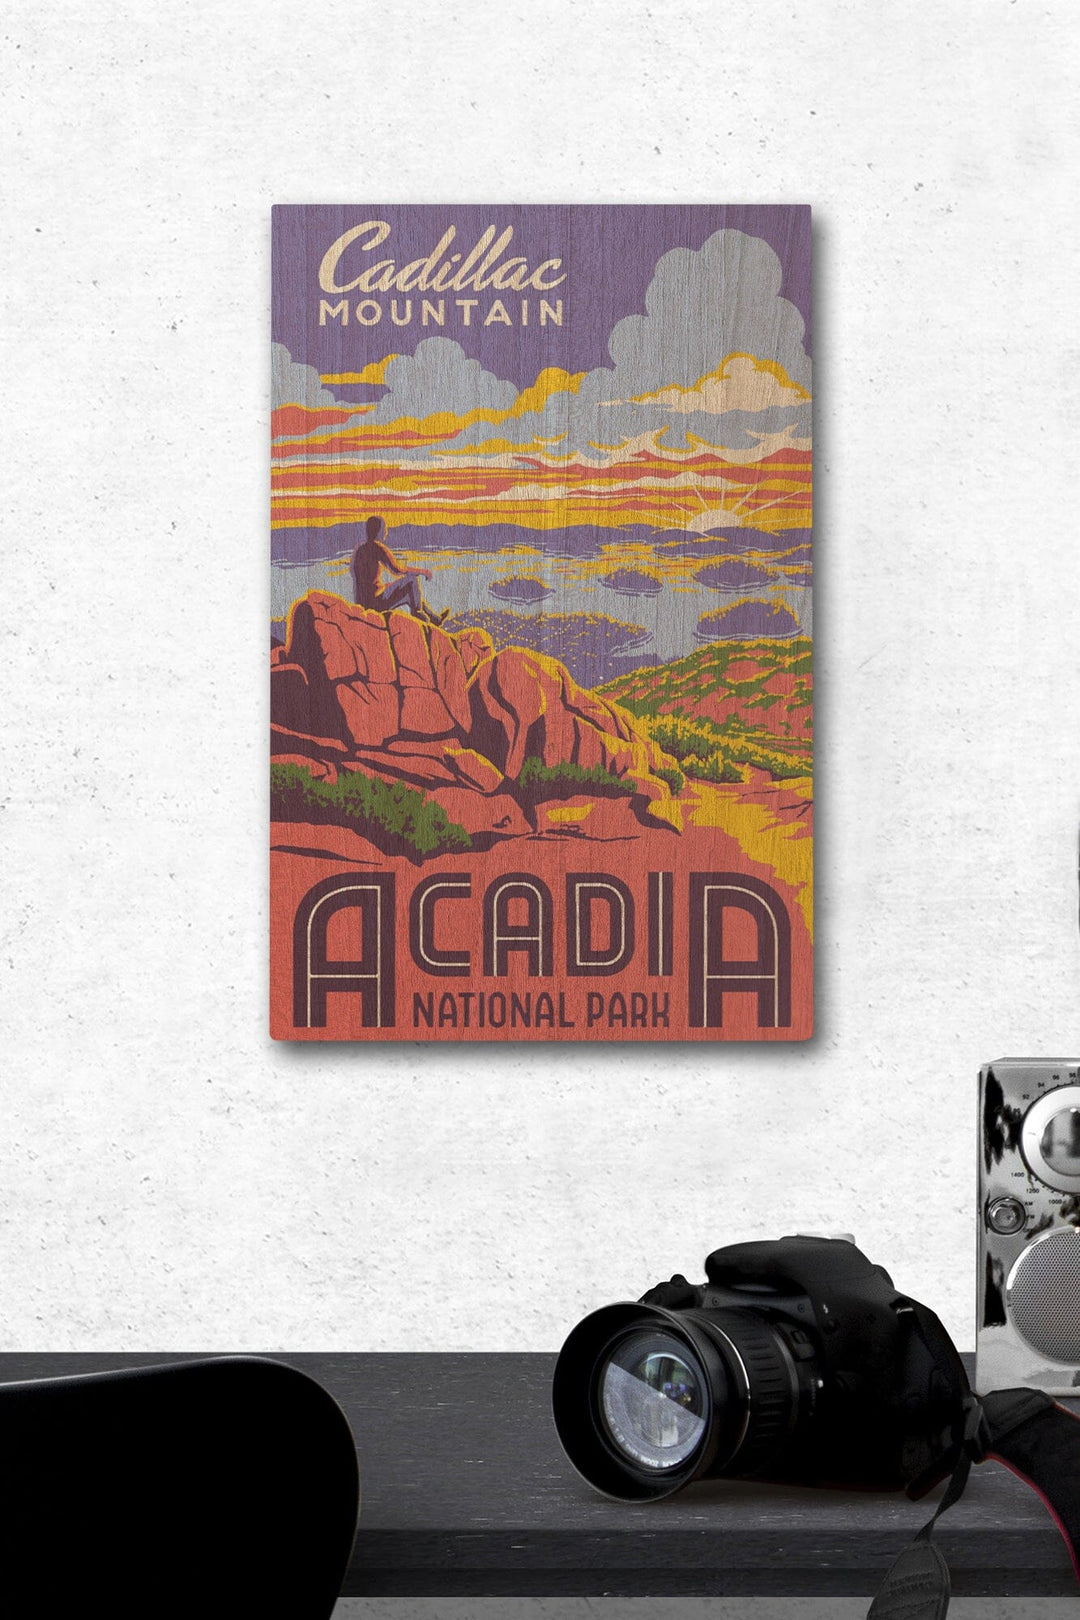 Acadia National Park, Maine, Explorer Series, Cadillac Mountain, Lantern Press Artwork, Wood Signs and Postcards Wood Lantern Press 12 x 18 Wood Gallery Print 